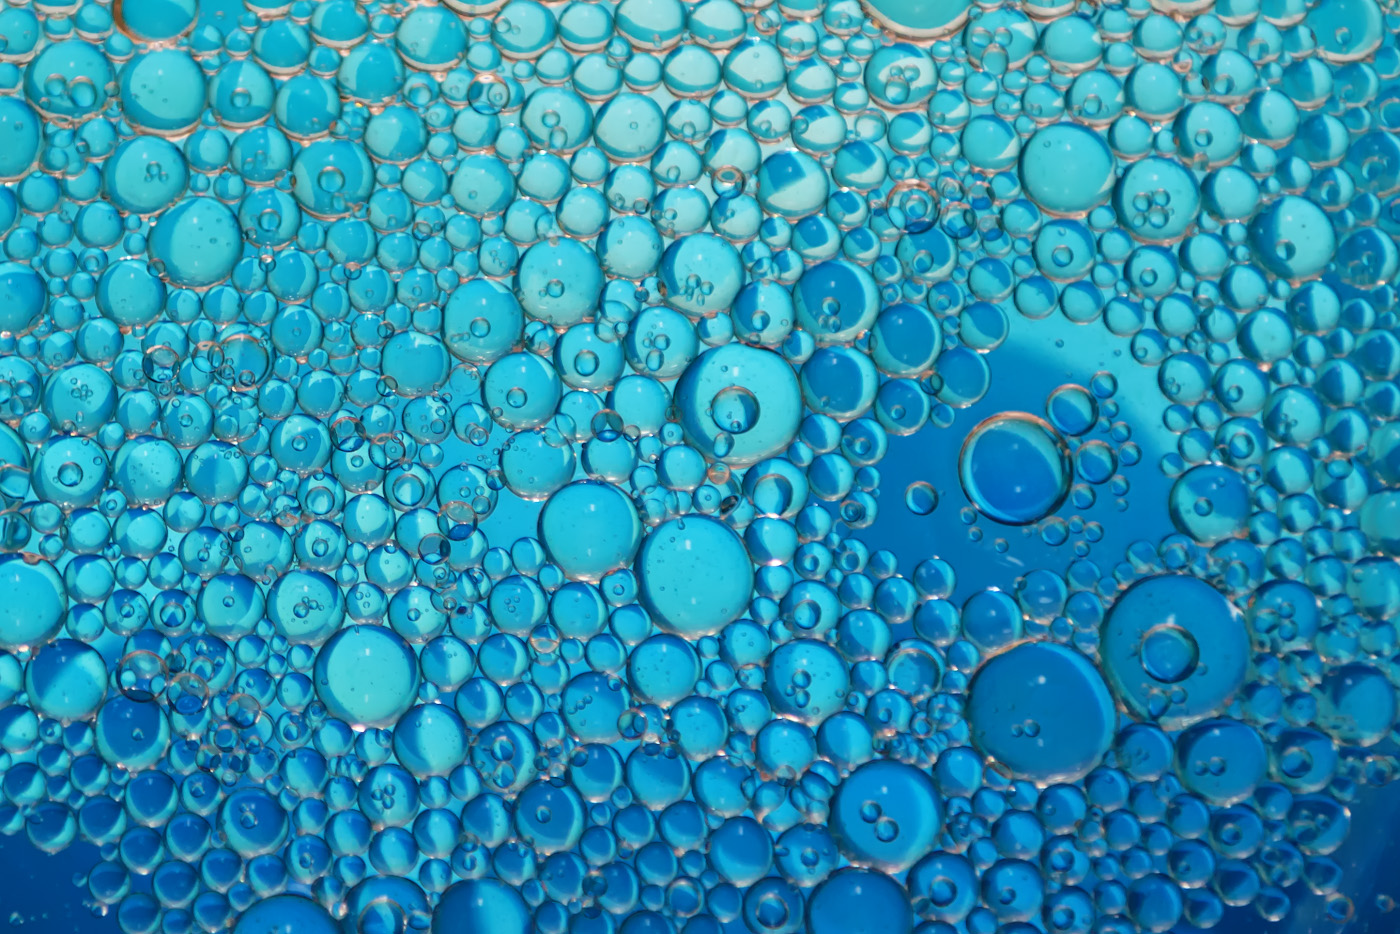 Фотография 7. Абстрактная картина из пузырей масла на воде. Снято на Сони А6000 + Никон 24-70/2.8.